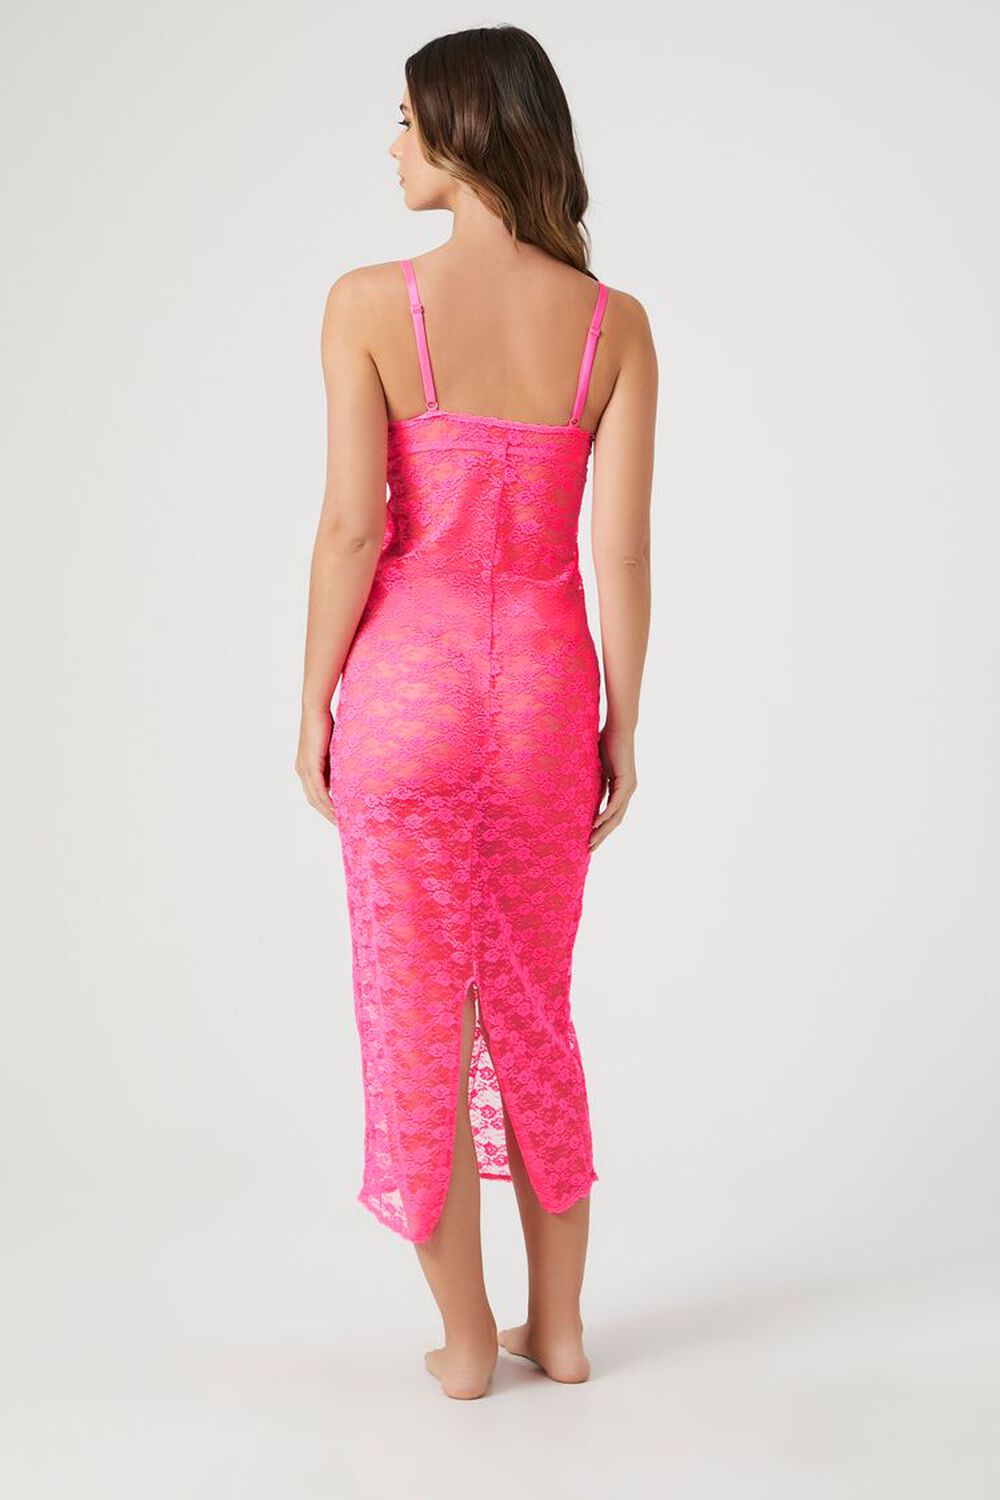 NEON PINK Sheer Lace Lingerie Maxi Slip Dress, image 3